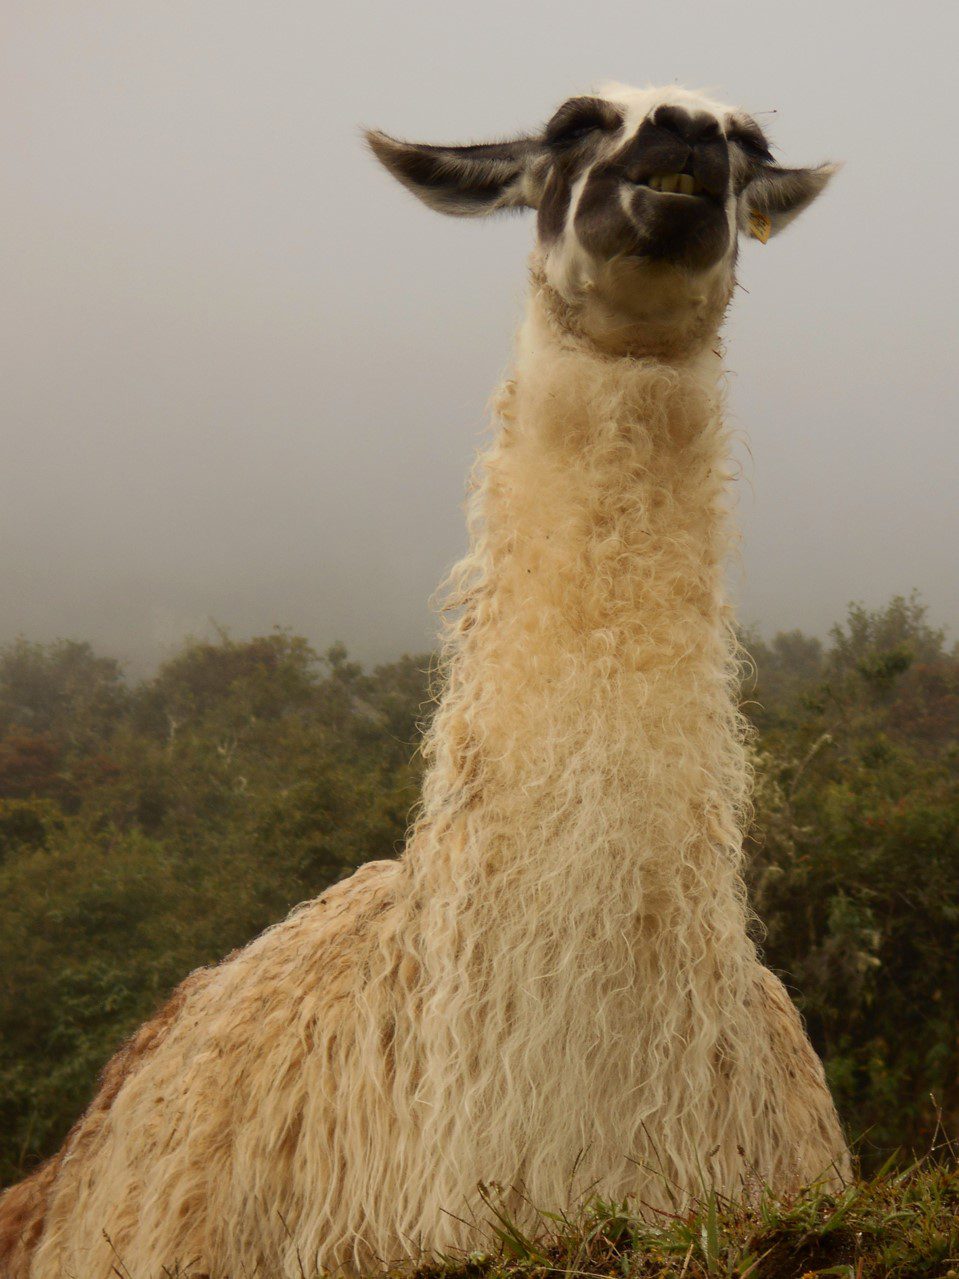 Close up of a smiling llama